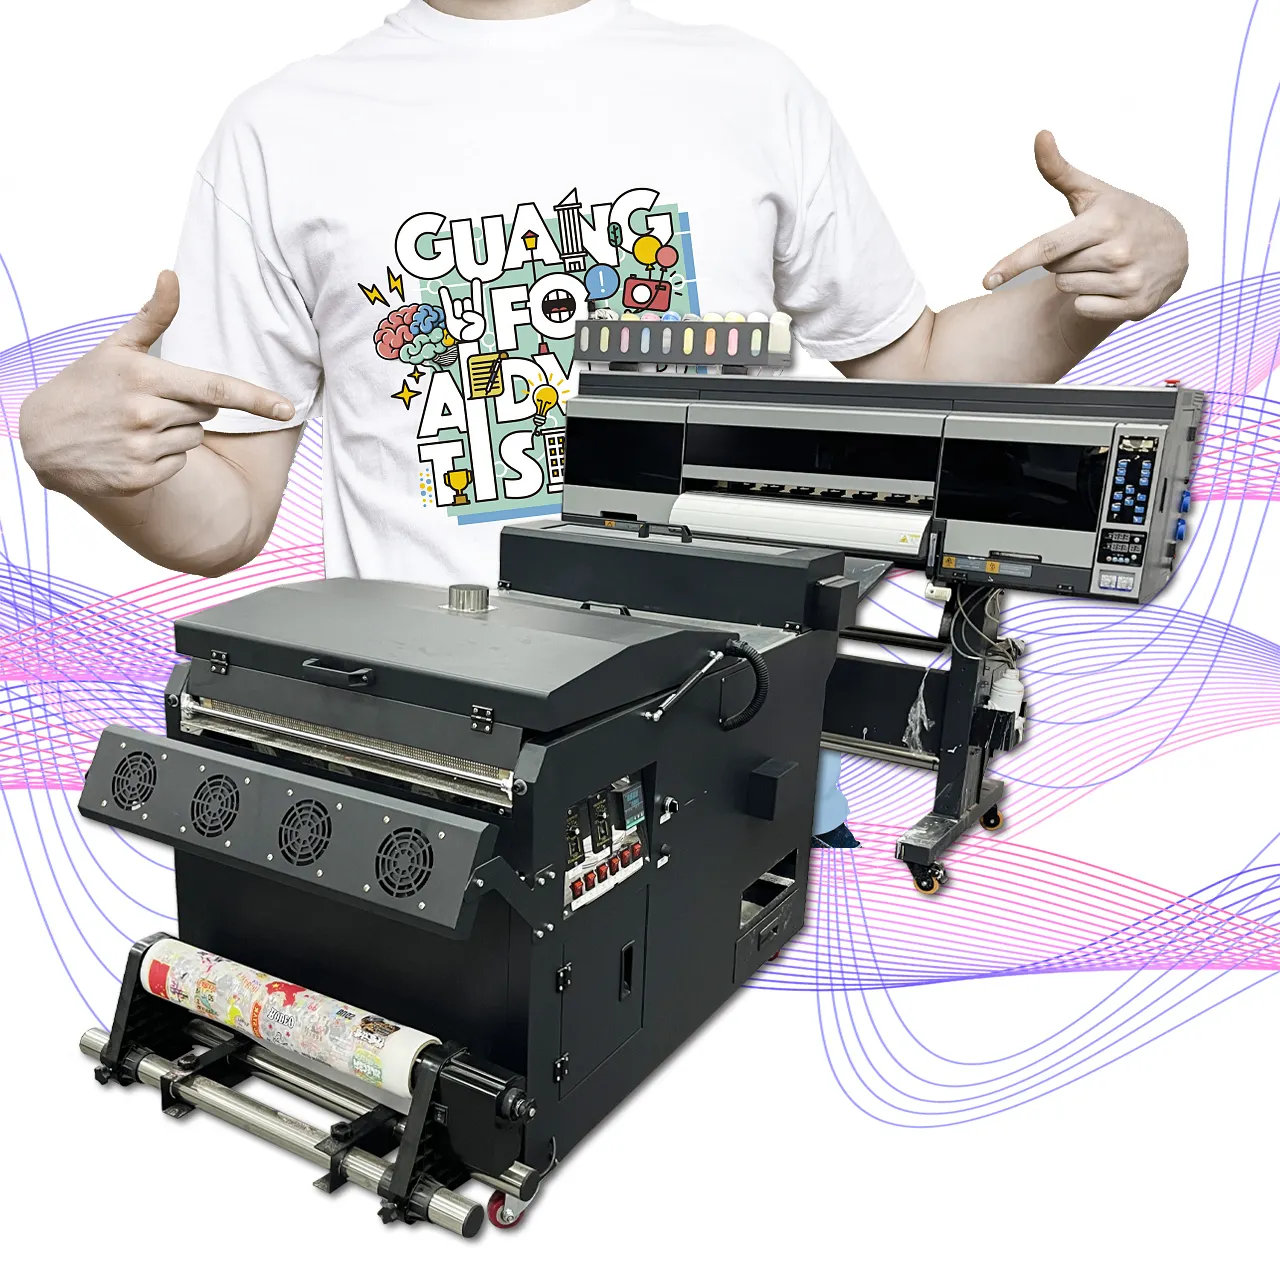 Impresora de tinta blanca directa a película, impresora de inyección de tinta de transferencia de calor offset de plastisol, impresora i3200 DTF con coctelera y secadora